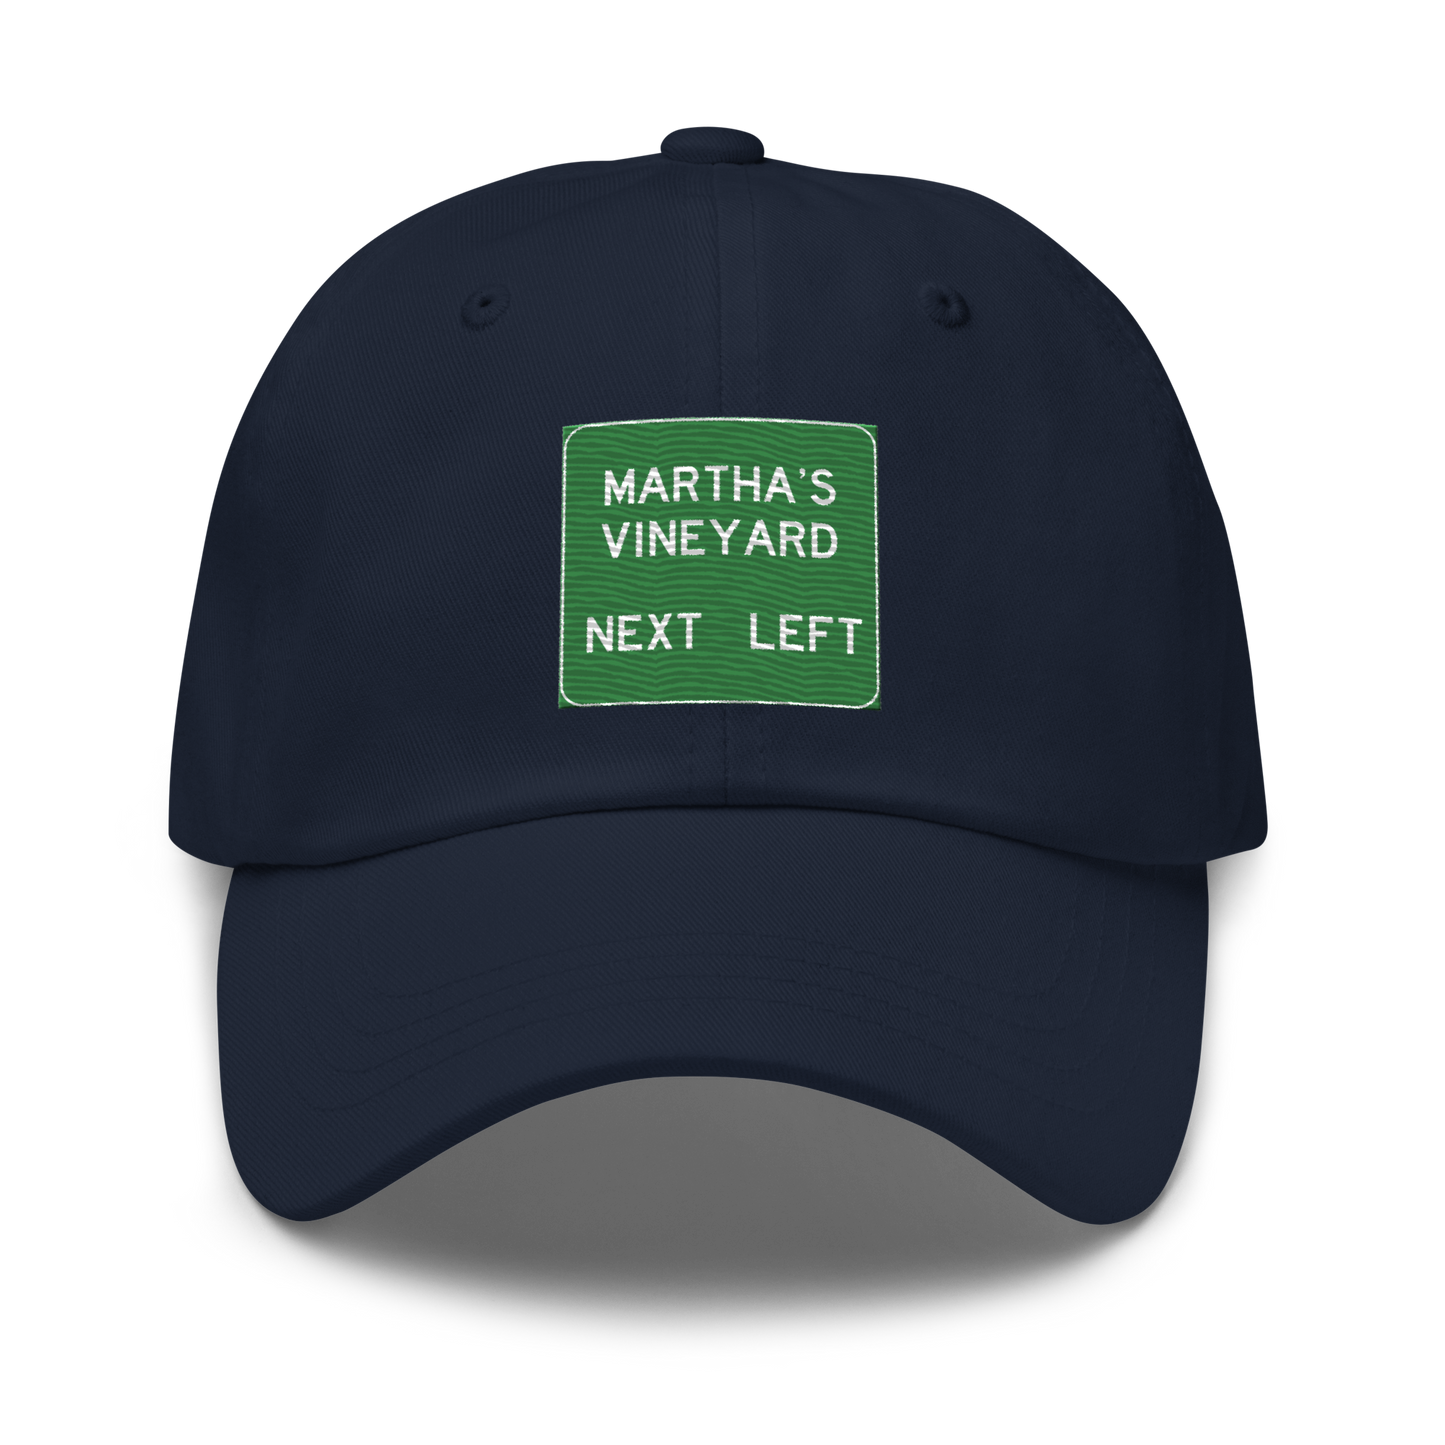 Next Left Hat